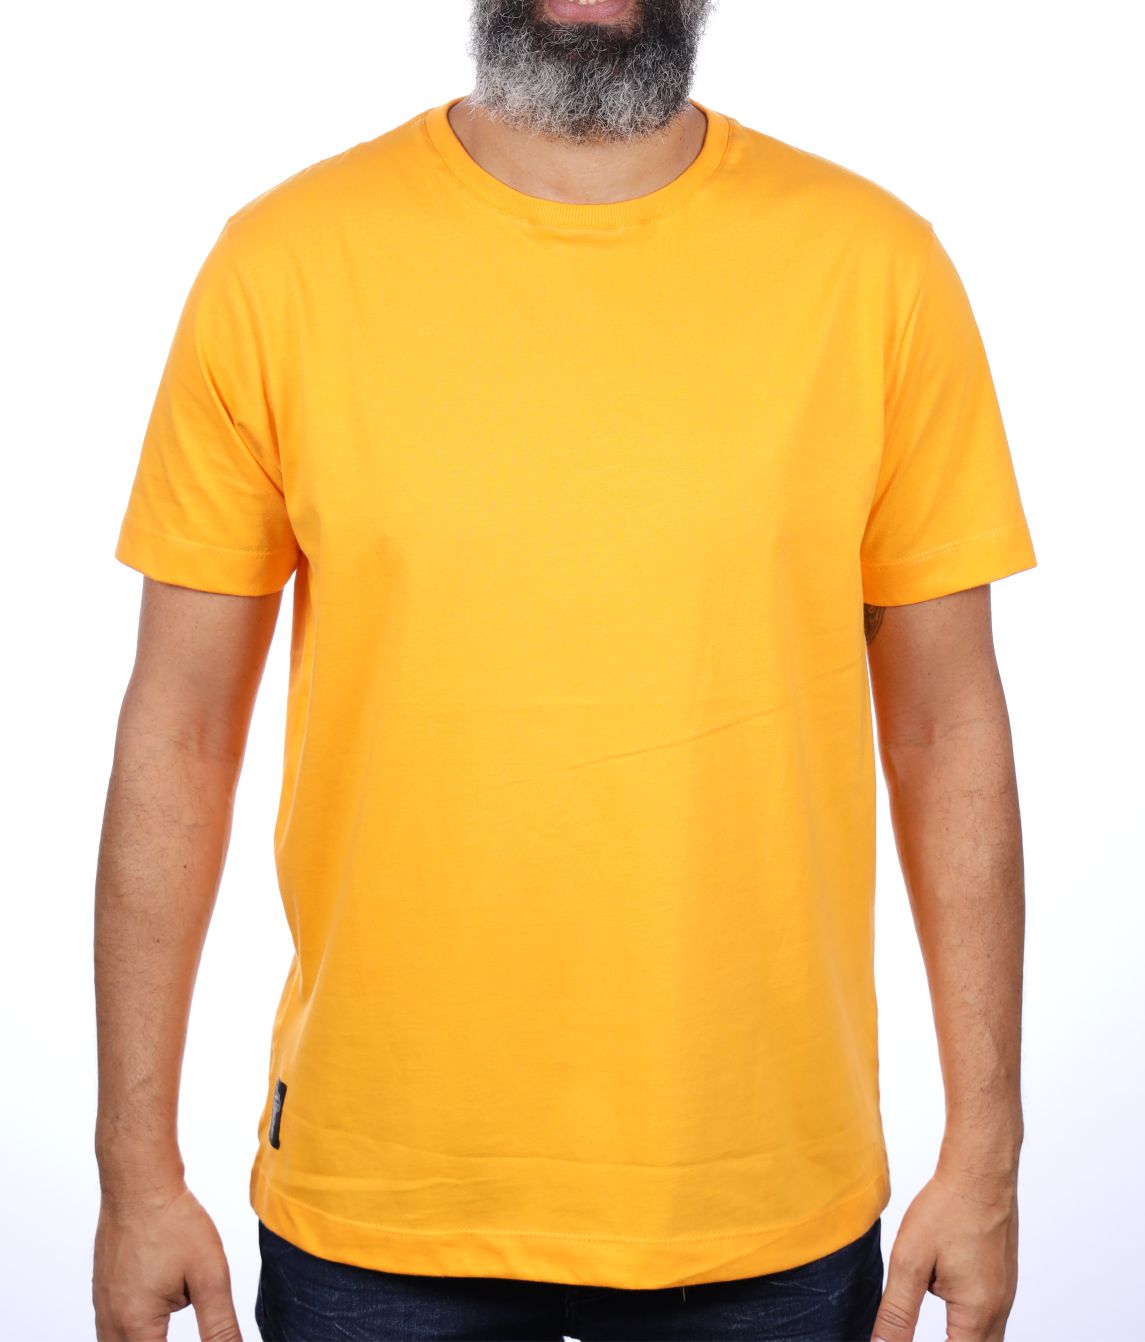 Camiseta Básica Amarela